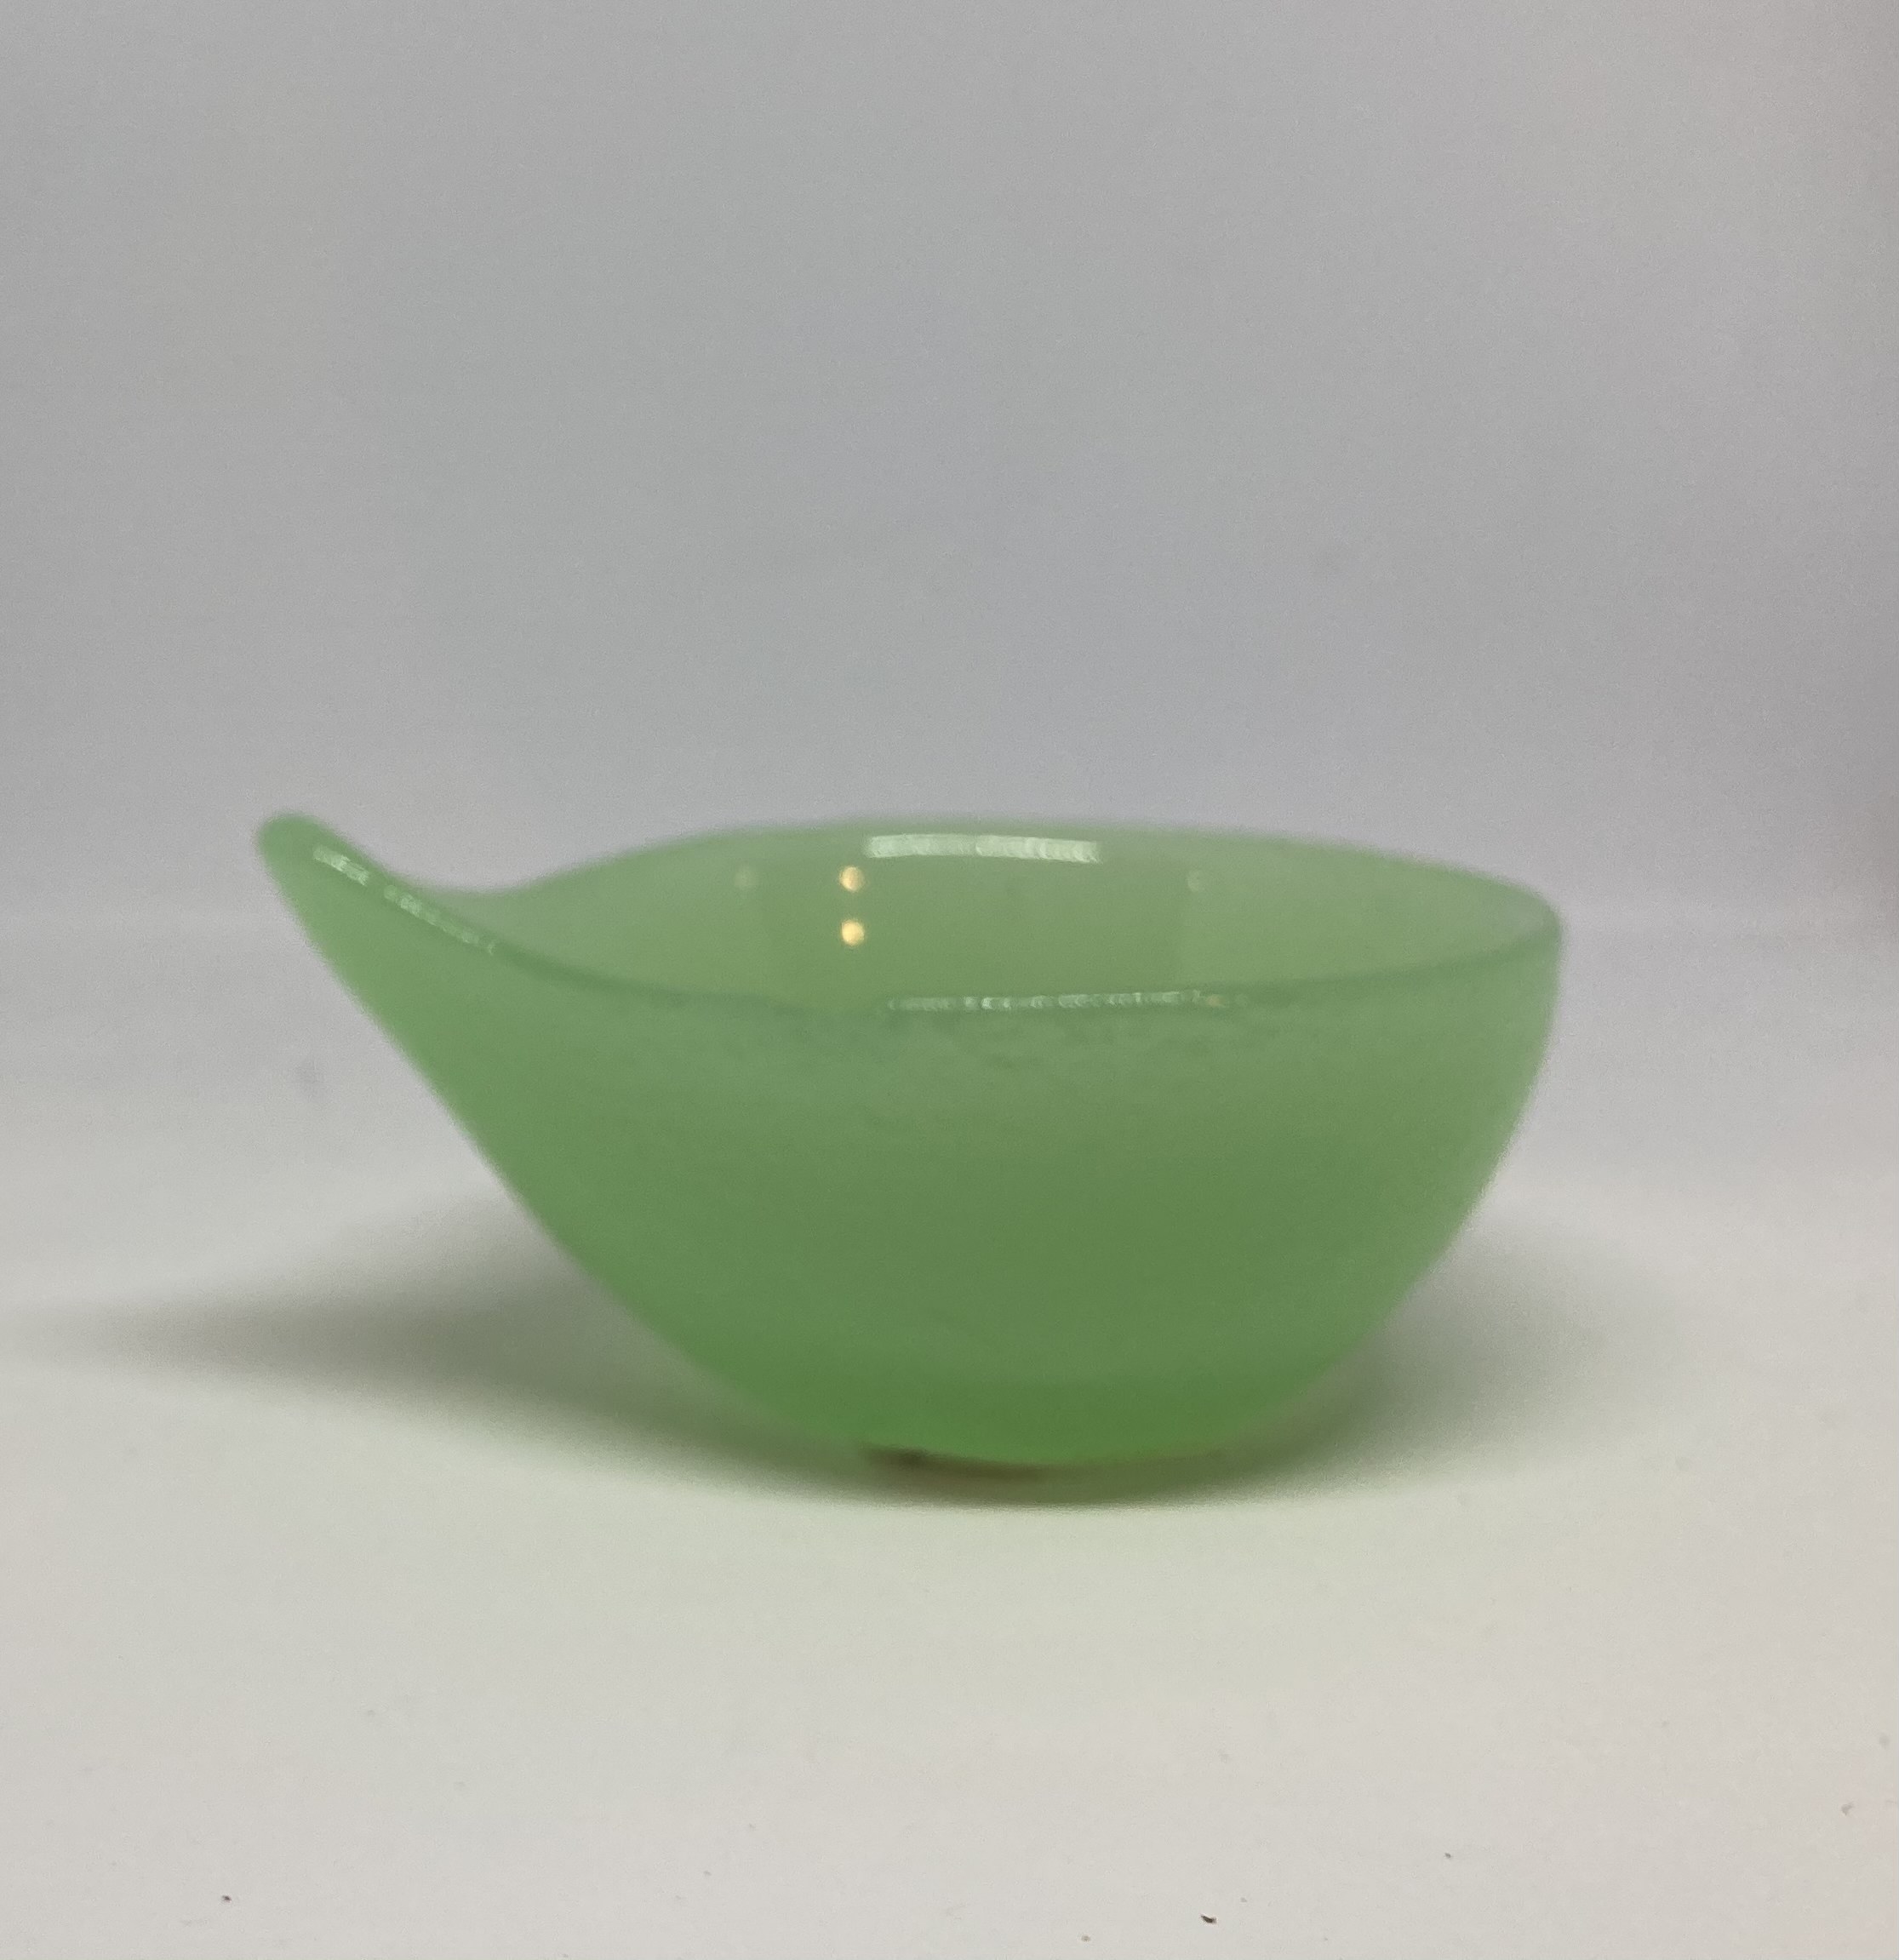 https://tallulahpoint.net/wp-content/uploads/2020/12/jadeite-mini-bowl.jpg